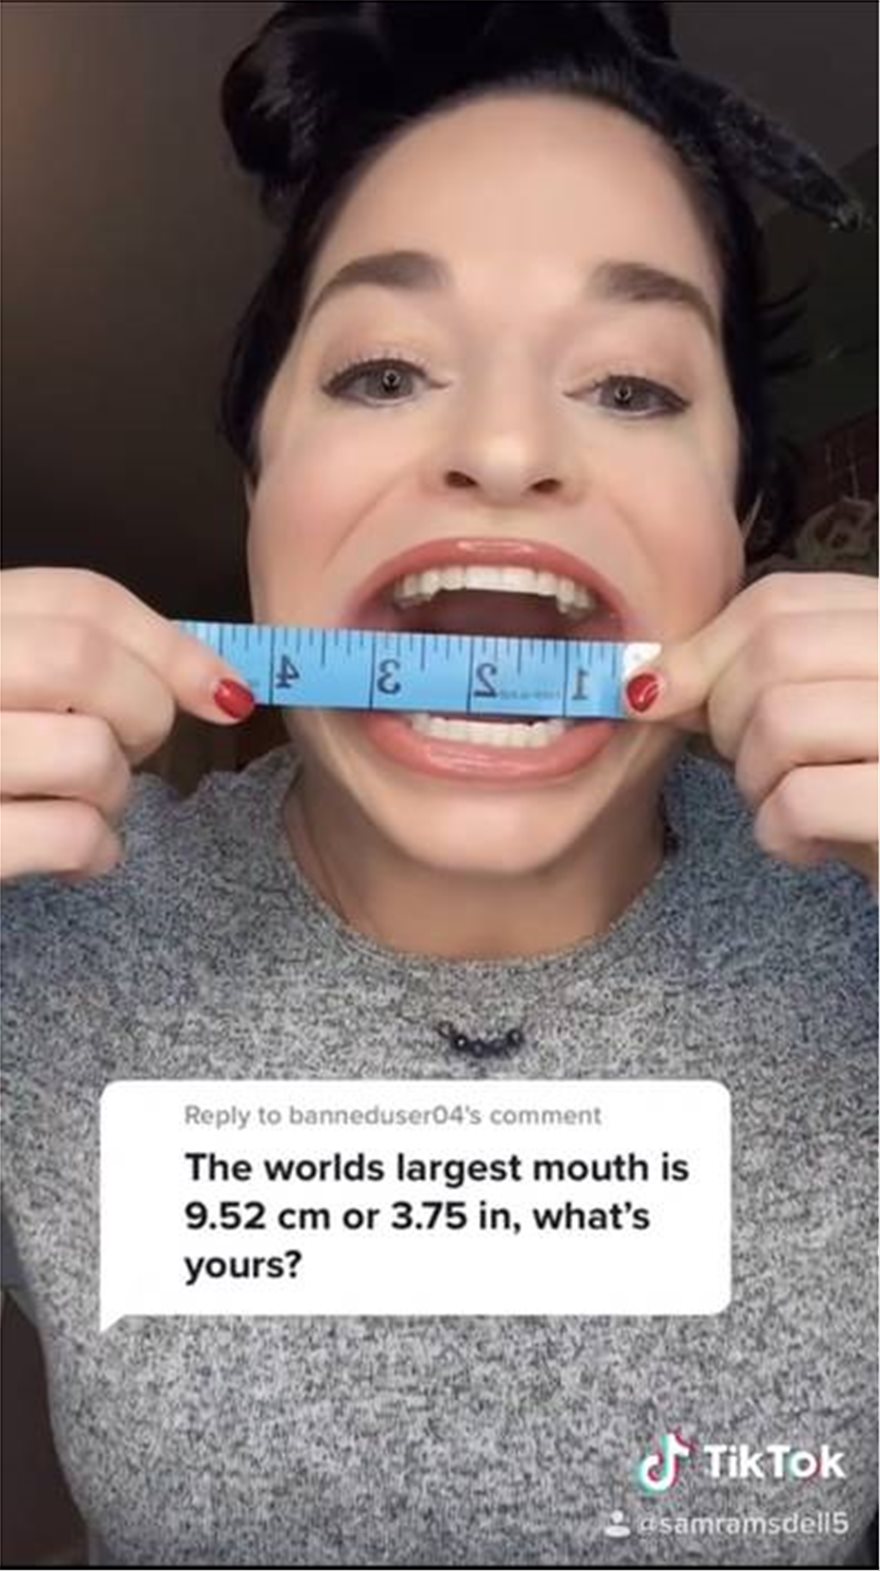 To τεράστιο στόμα της την έκανε διάσημη στο TikTok -βίντεο - Φωτογραφία 2